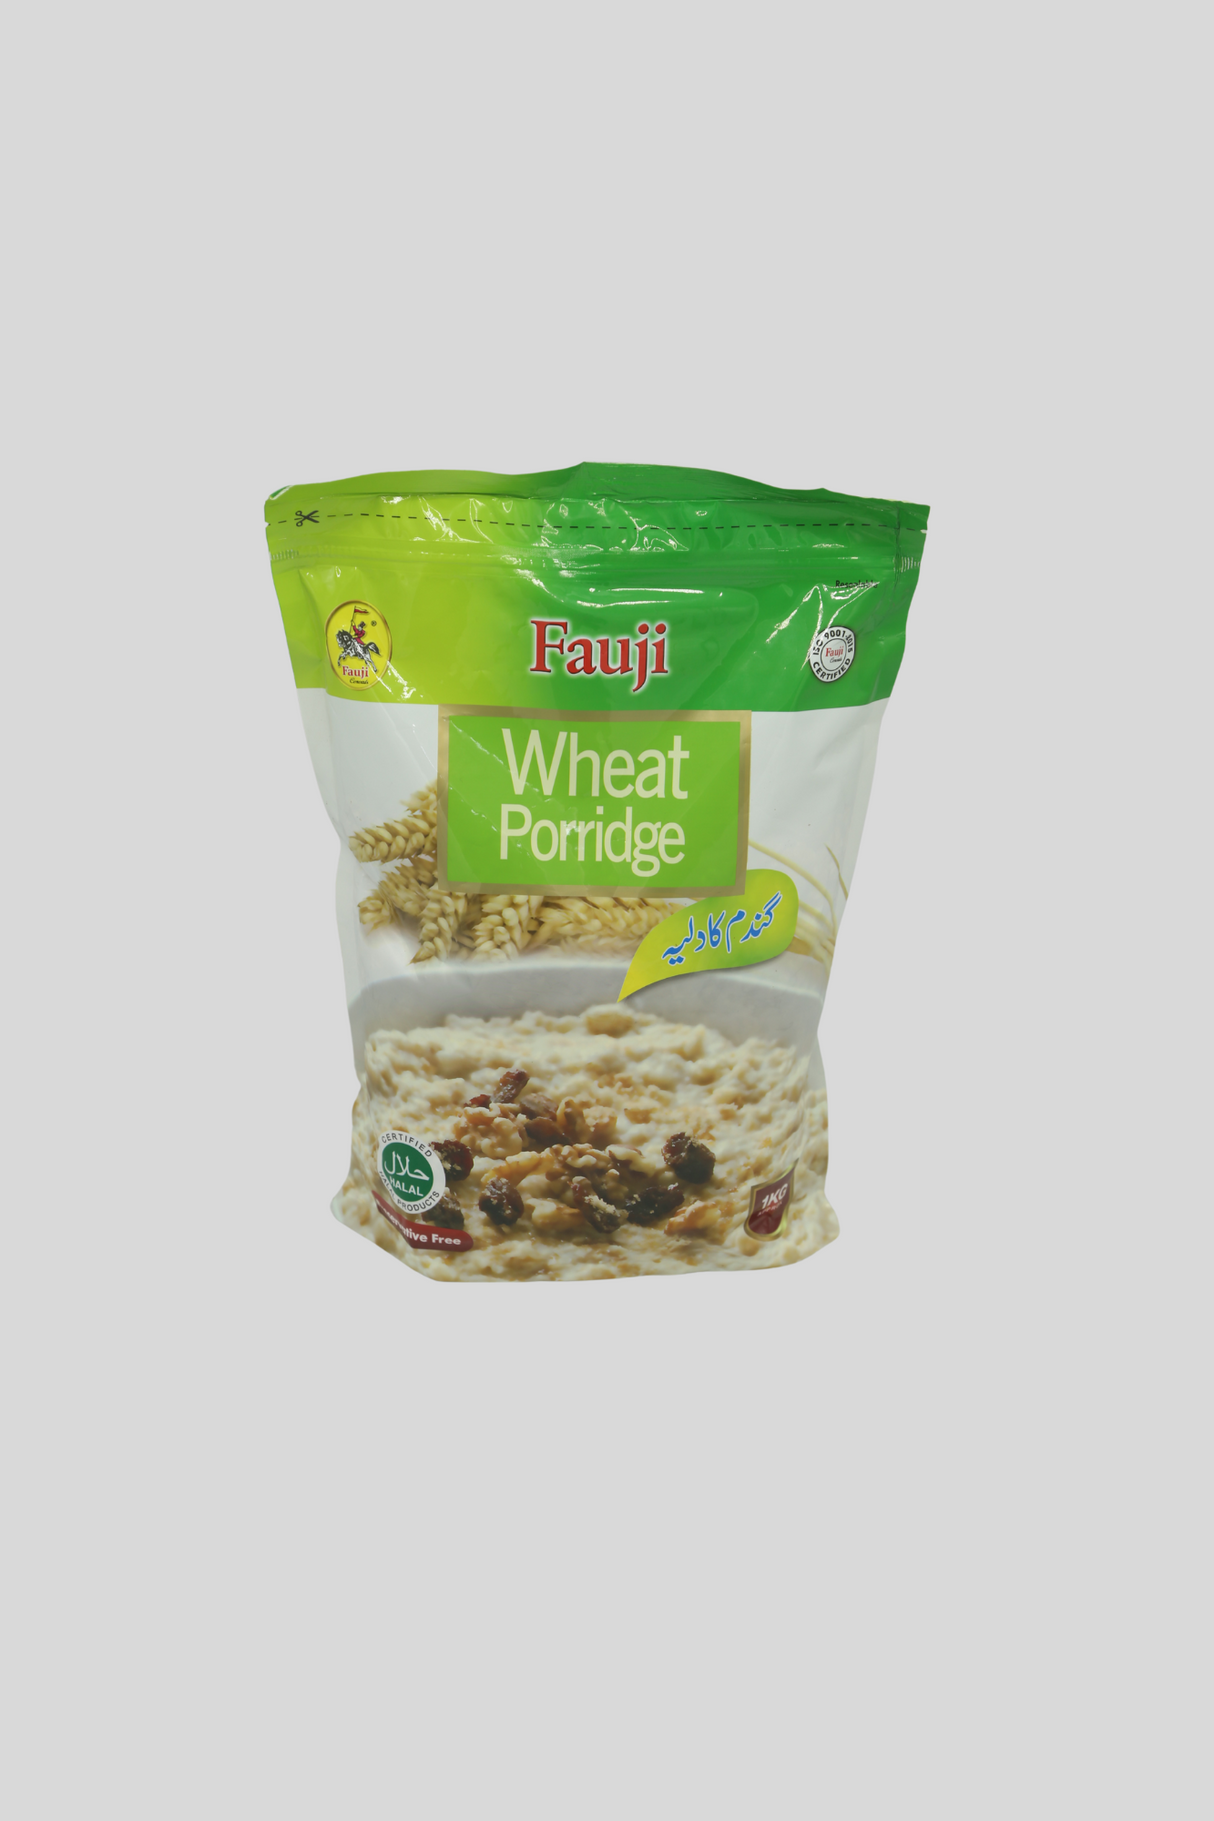 fauji porridge wheat 1kg